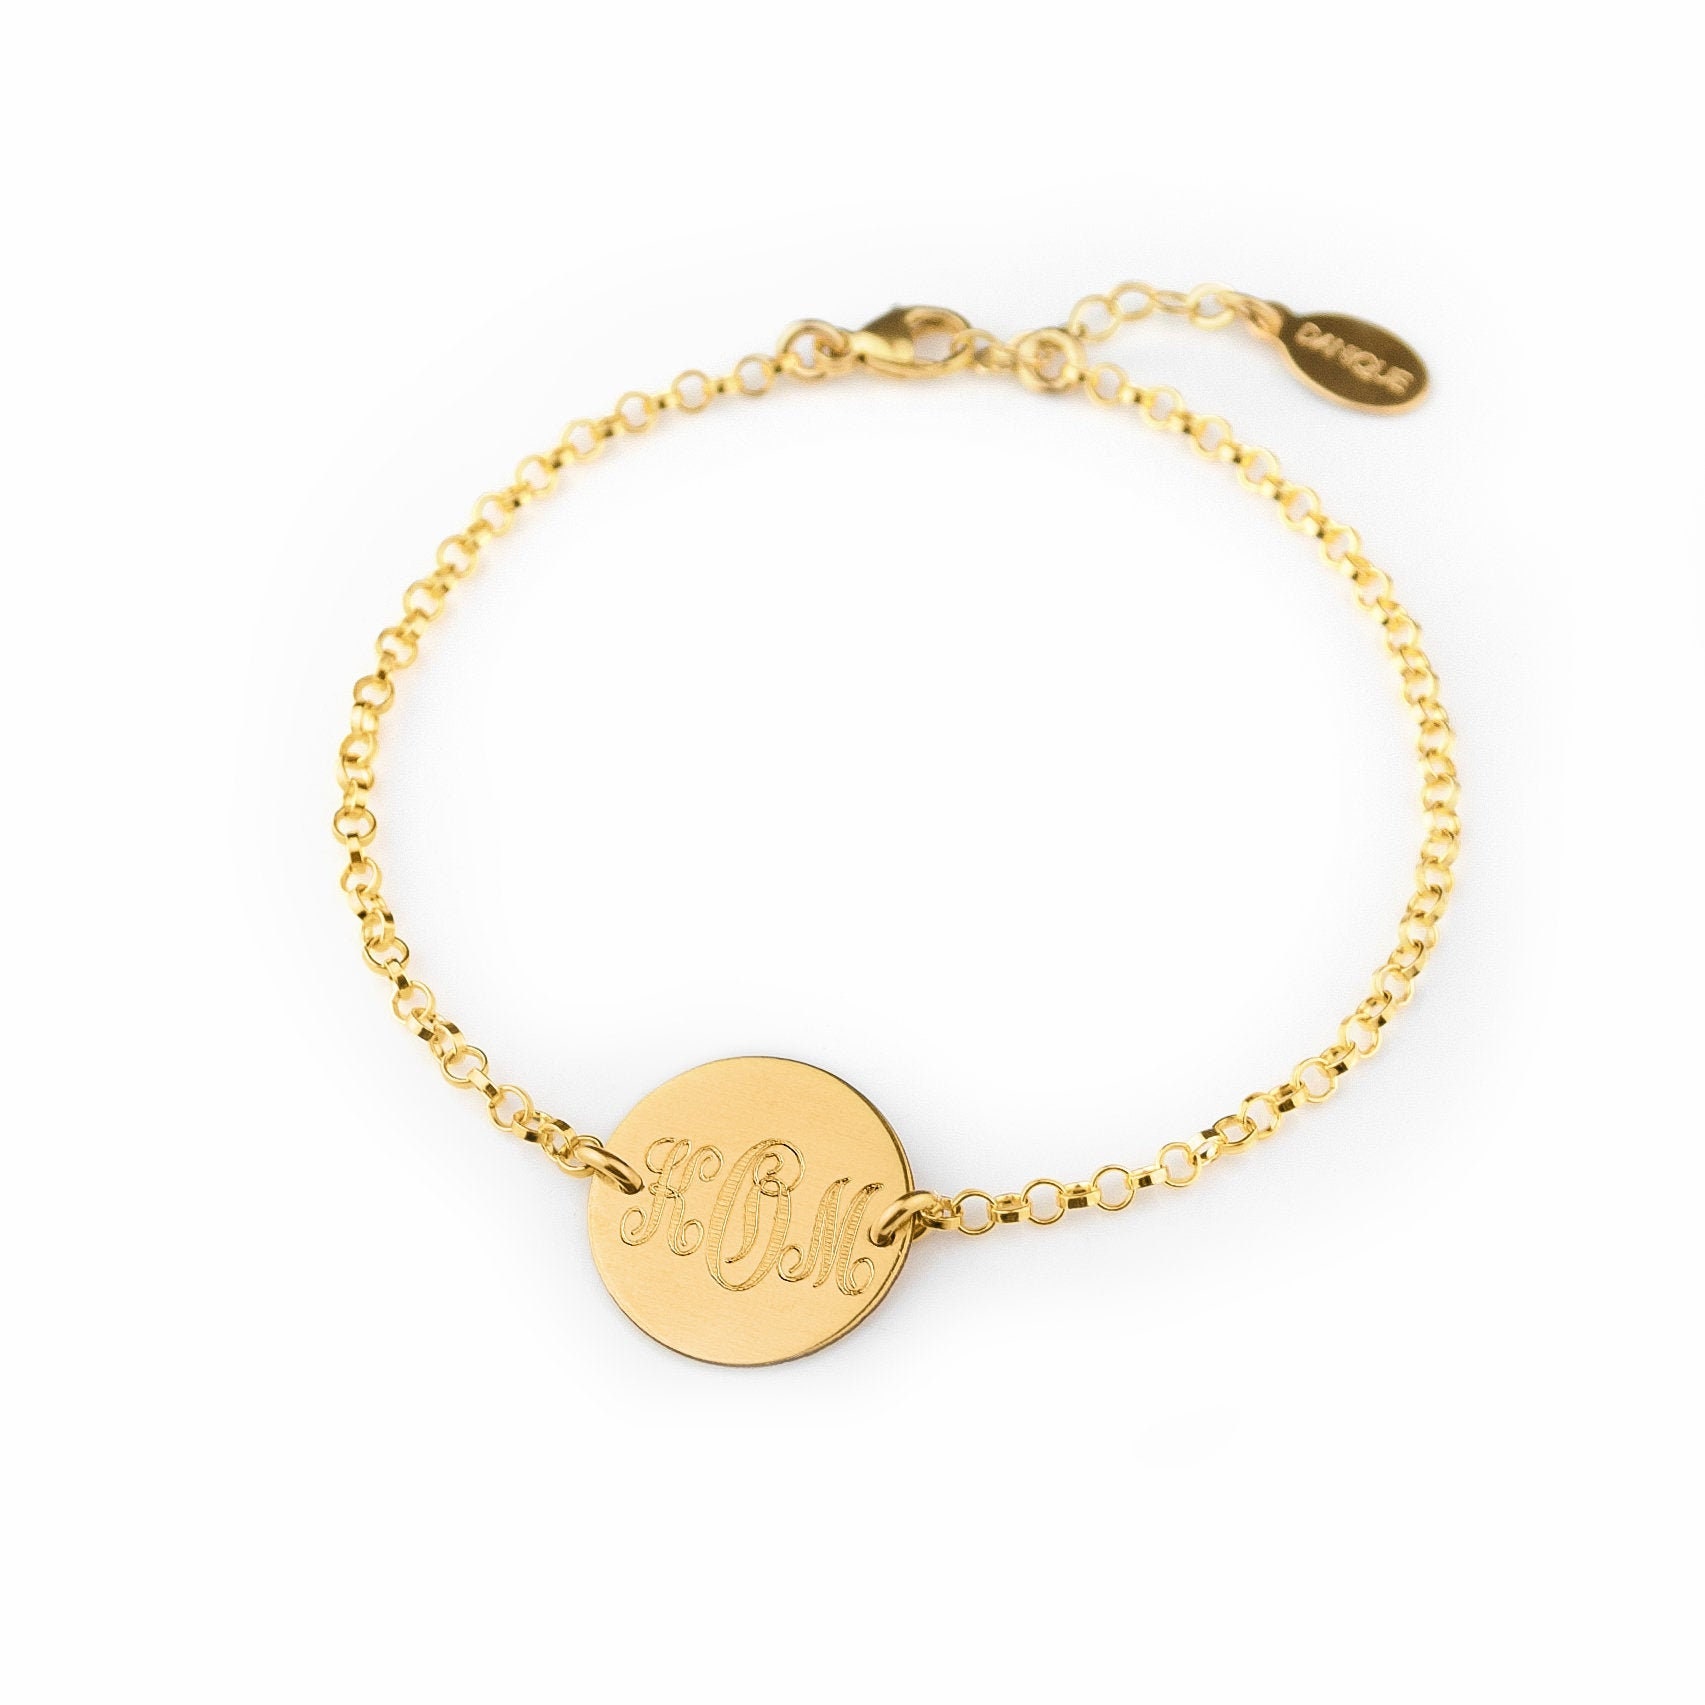 Personalized Monogram Bracelet, Large Disc Bracelet, Choose Your initials Bracelet, Personalized Bracelet, Gold Bracelet Bridesmaid Gift